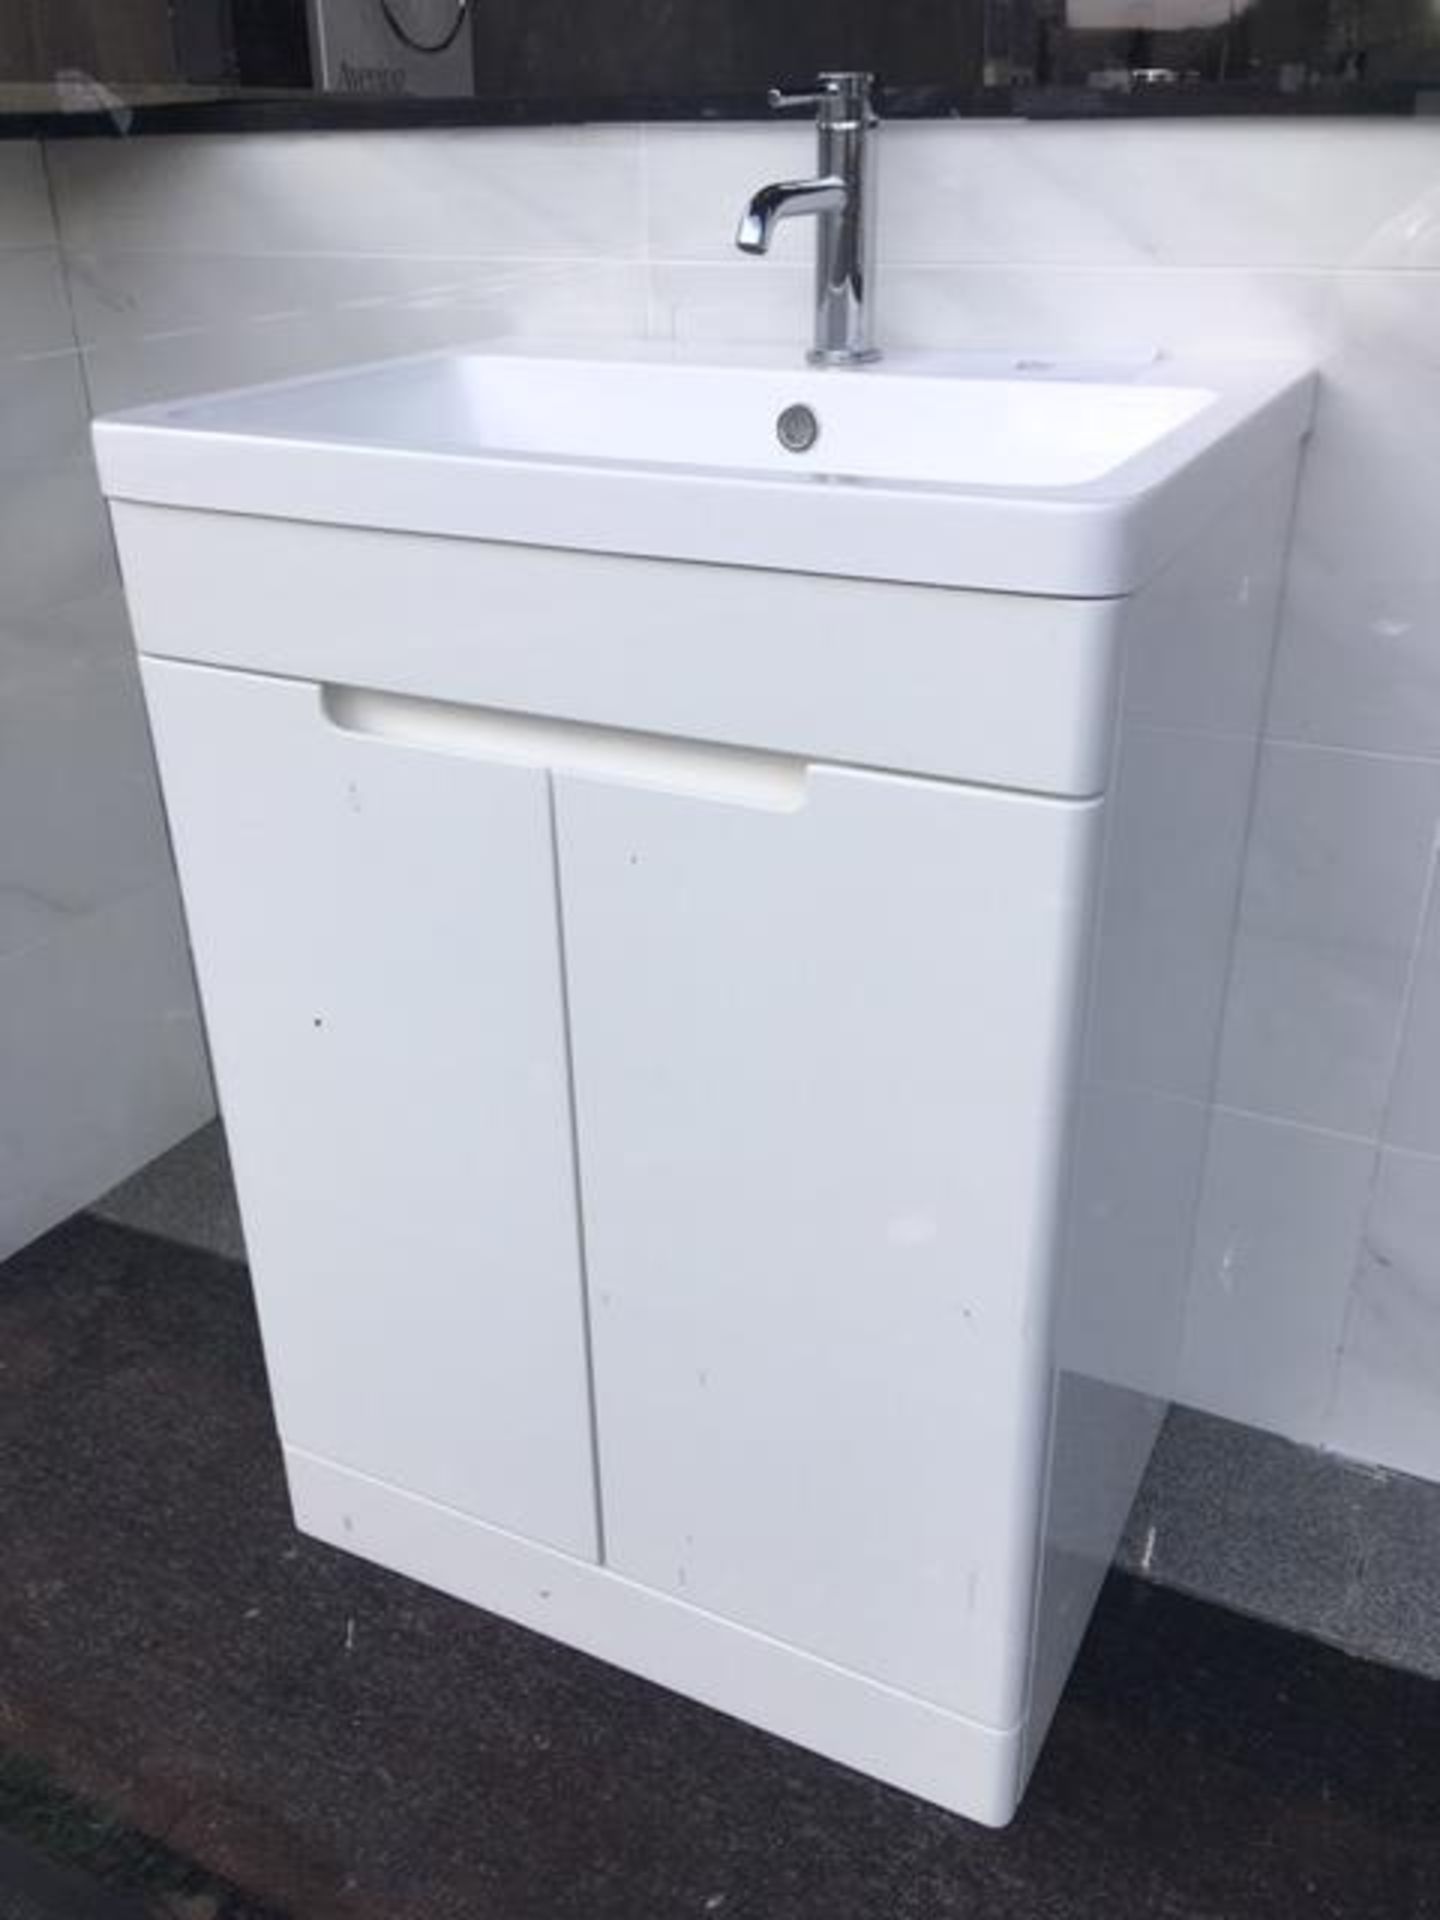 White gloss 2 door bathroom sink pedestal with sink & mixer tap